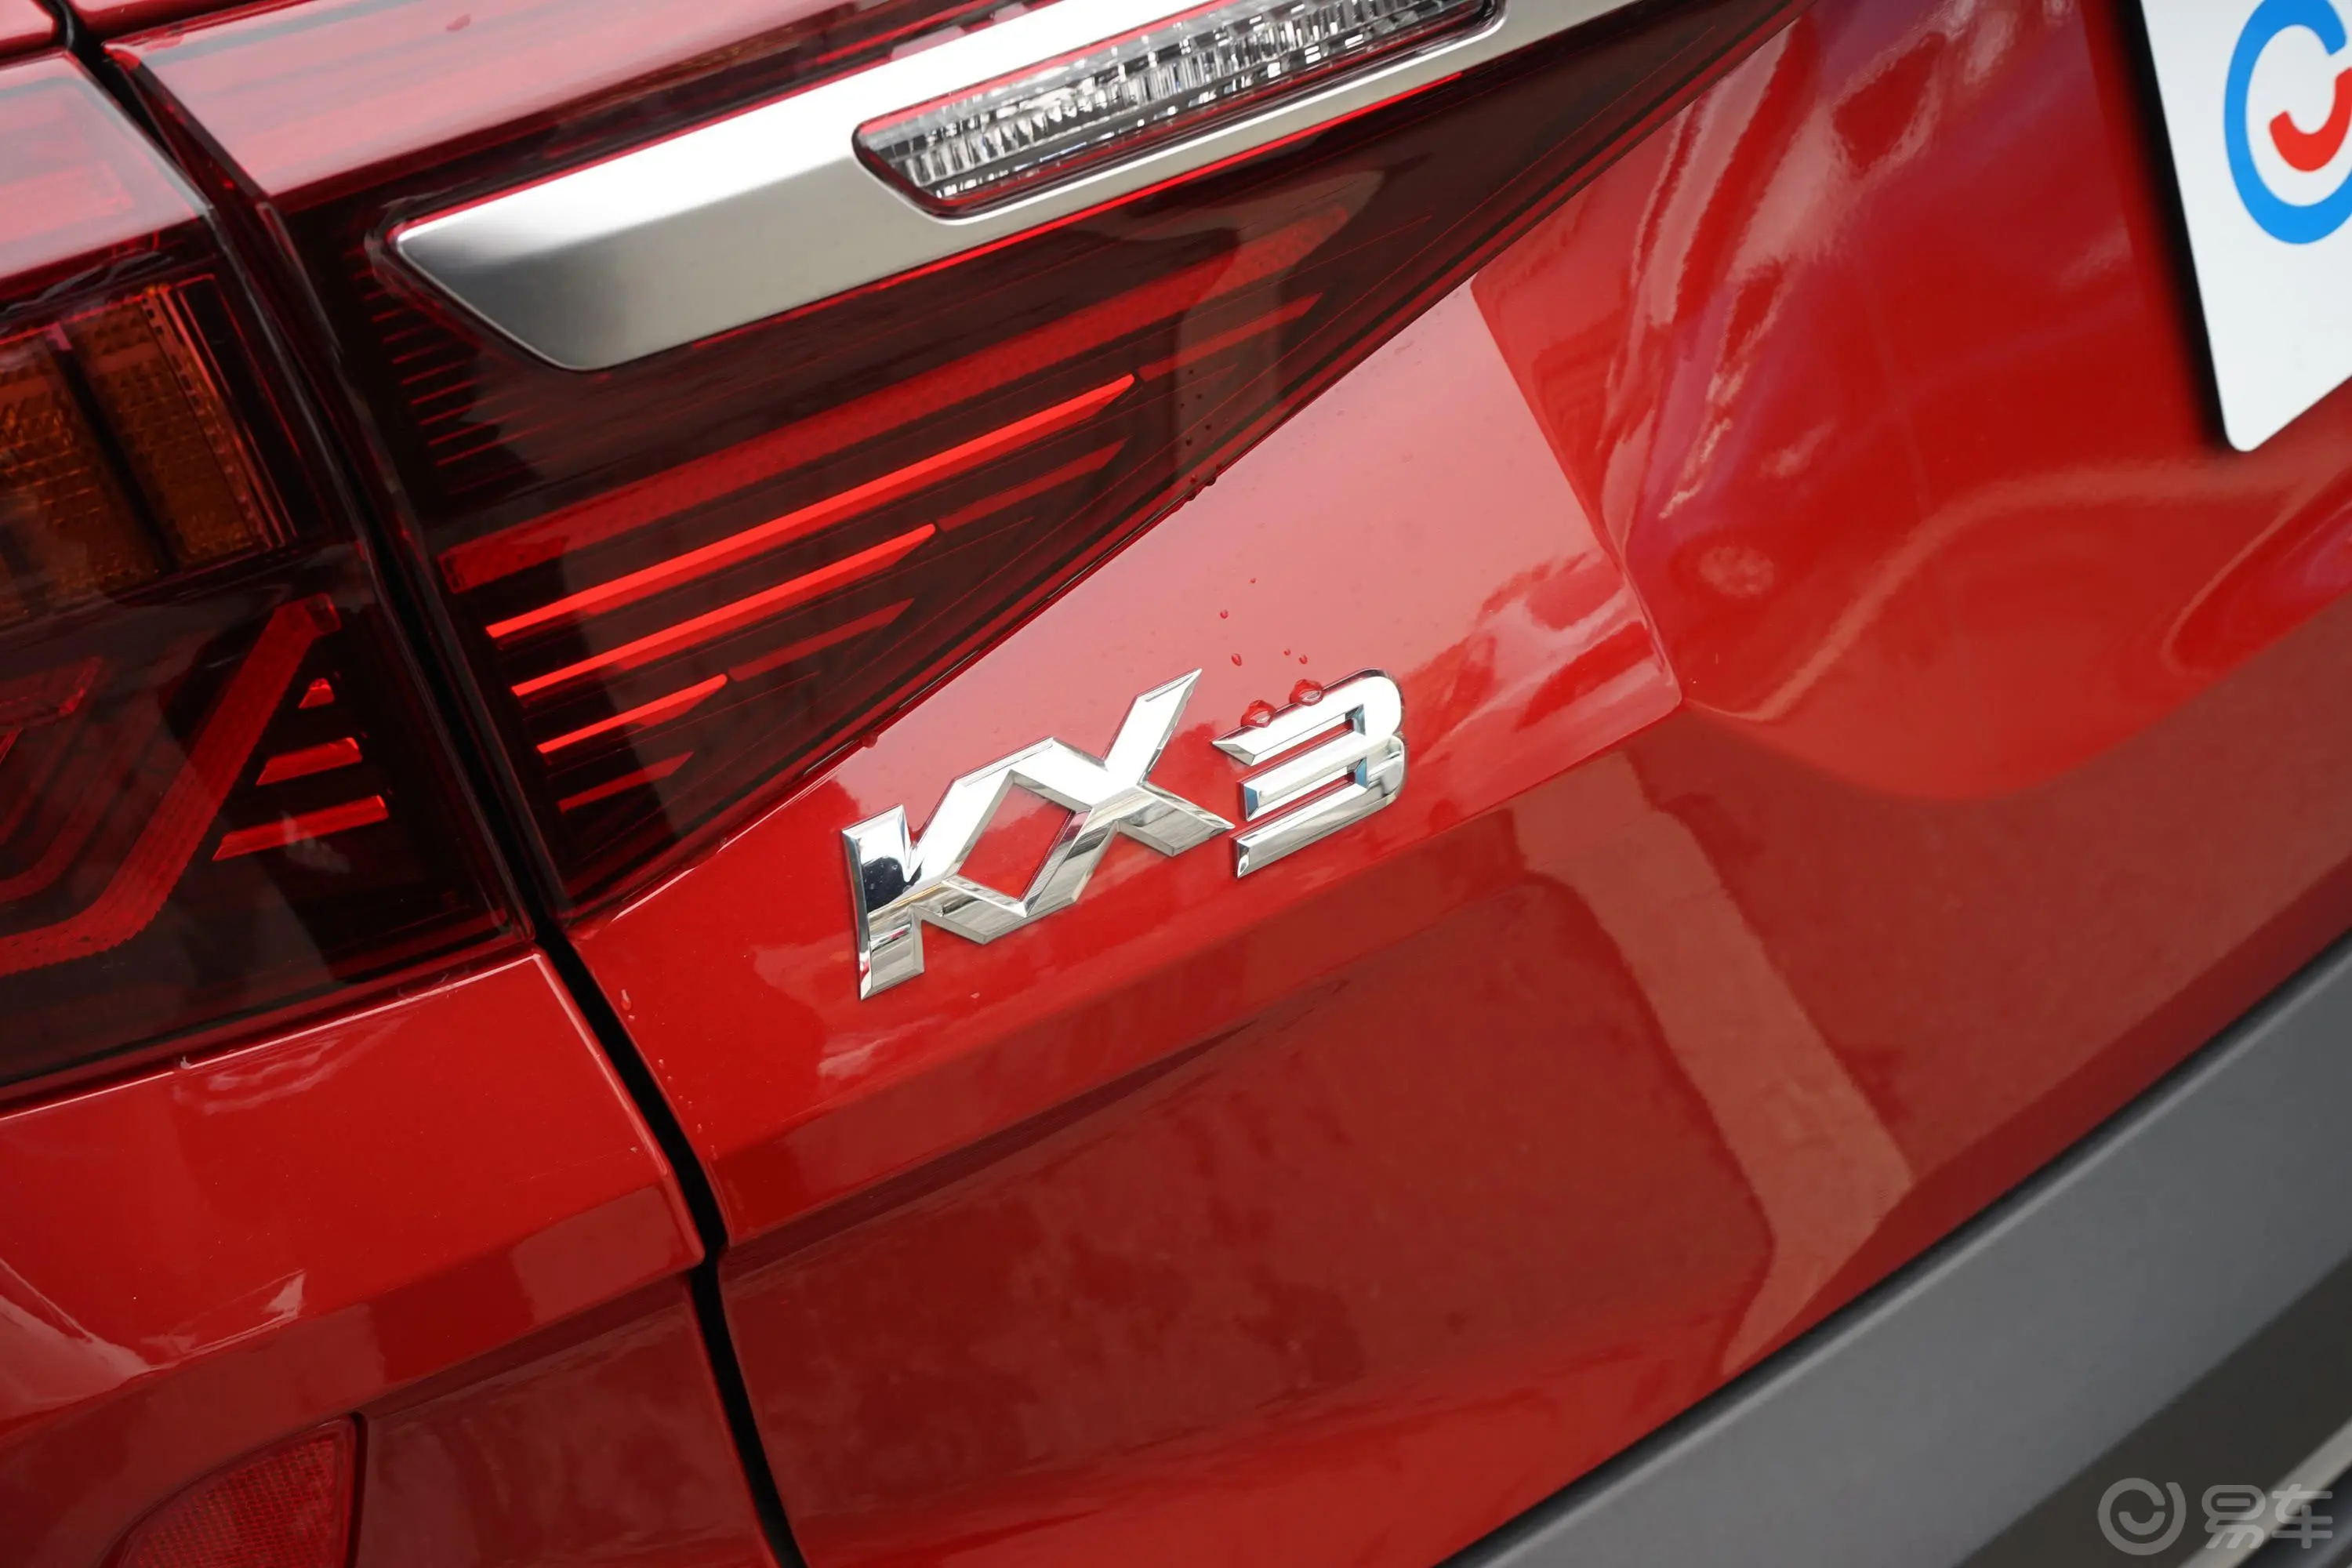 KX3傲跑1.5L CVT 潮流版外观